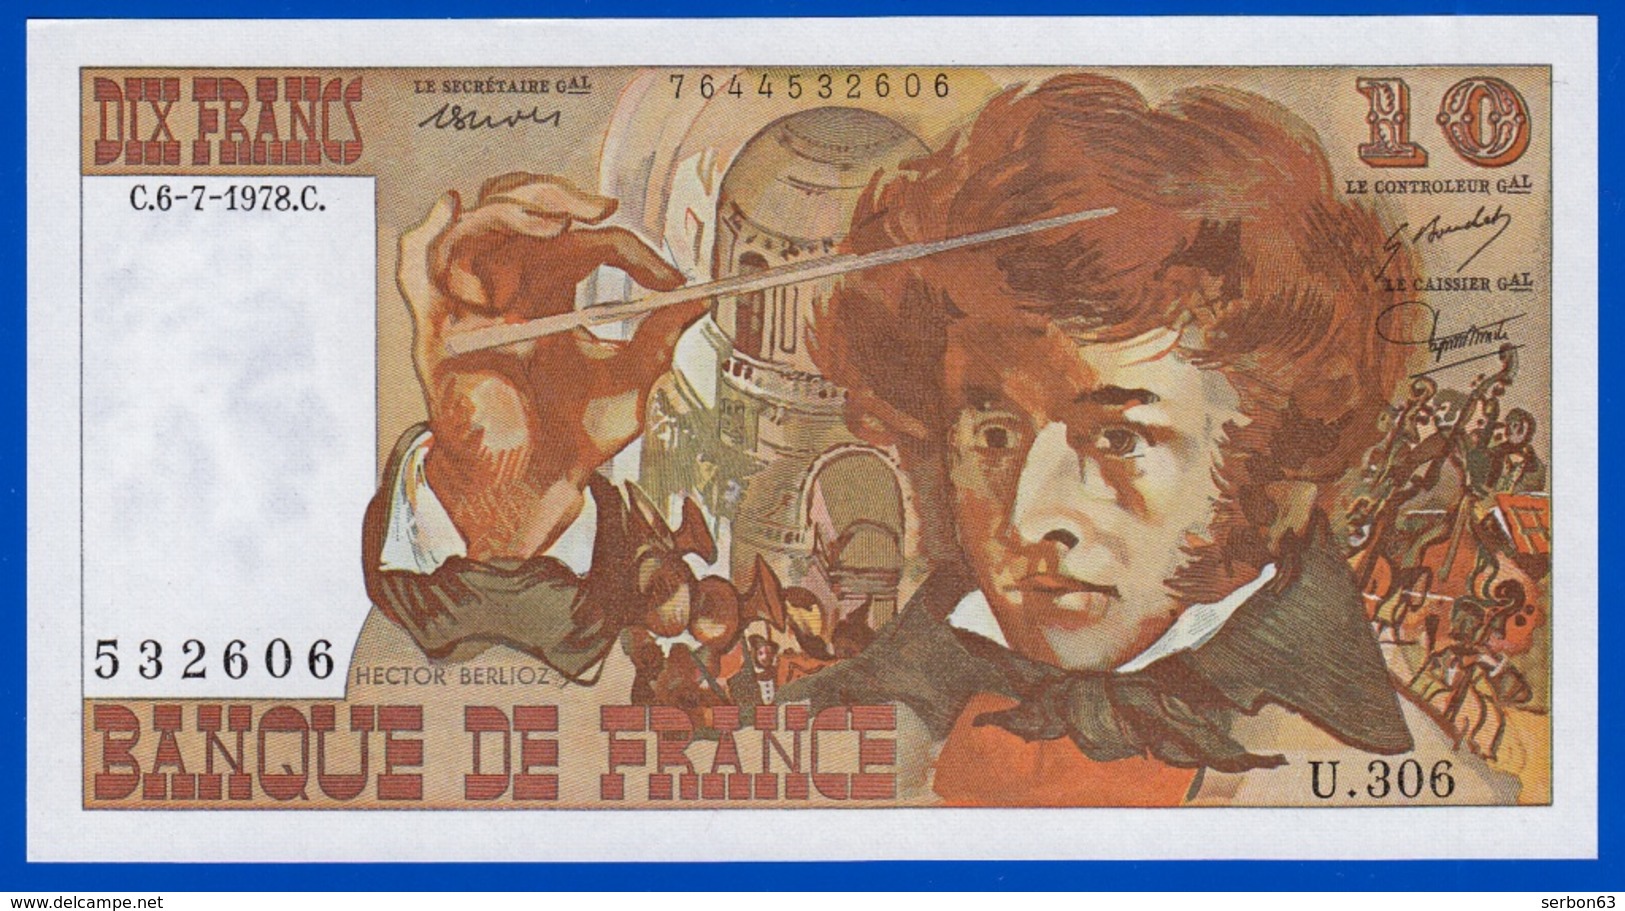 10 FRANCS BERLIOZ BILLET BANQUE DE FRANCE NEUF TYPE 1972  U.306. N° 532606 DU C.6-7-1978.C. Serbon63 - 10 F 1972-1978 ''Berlioz''